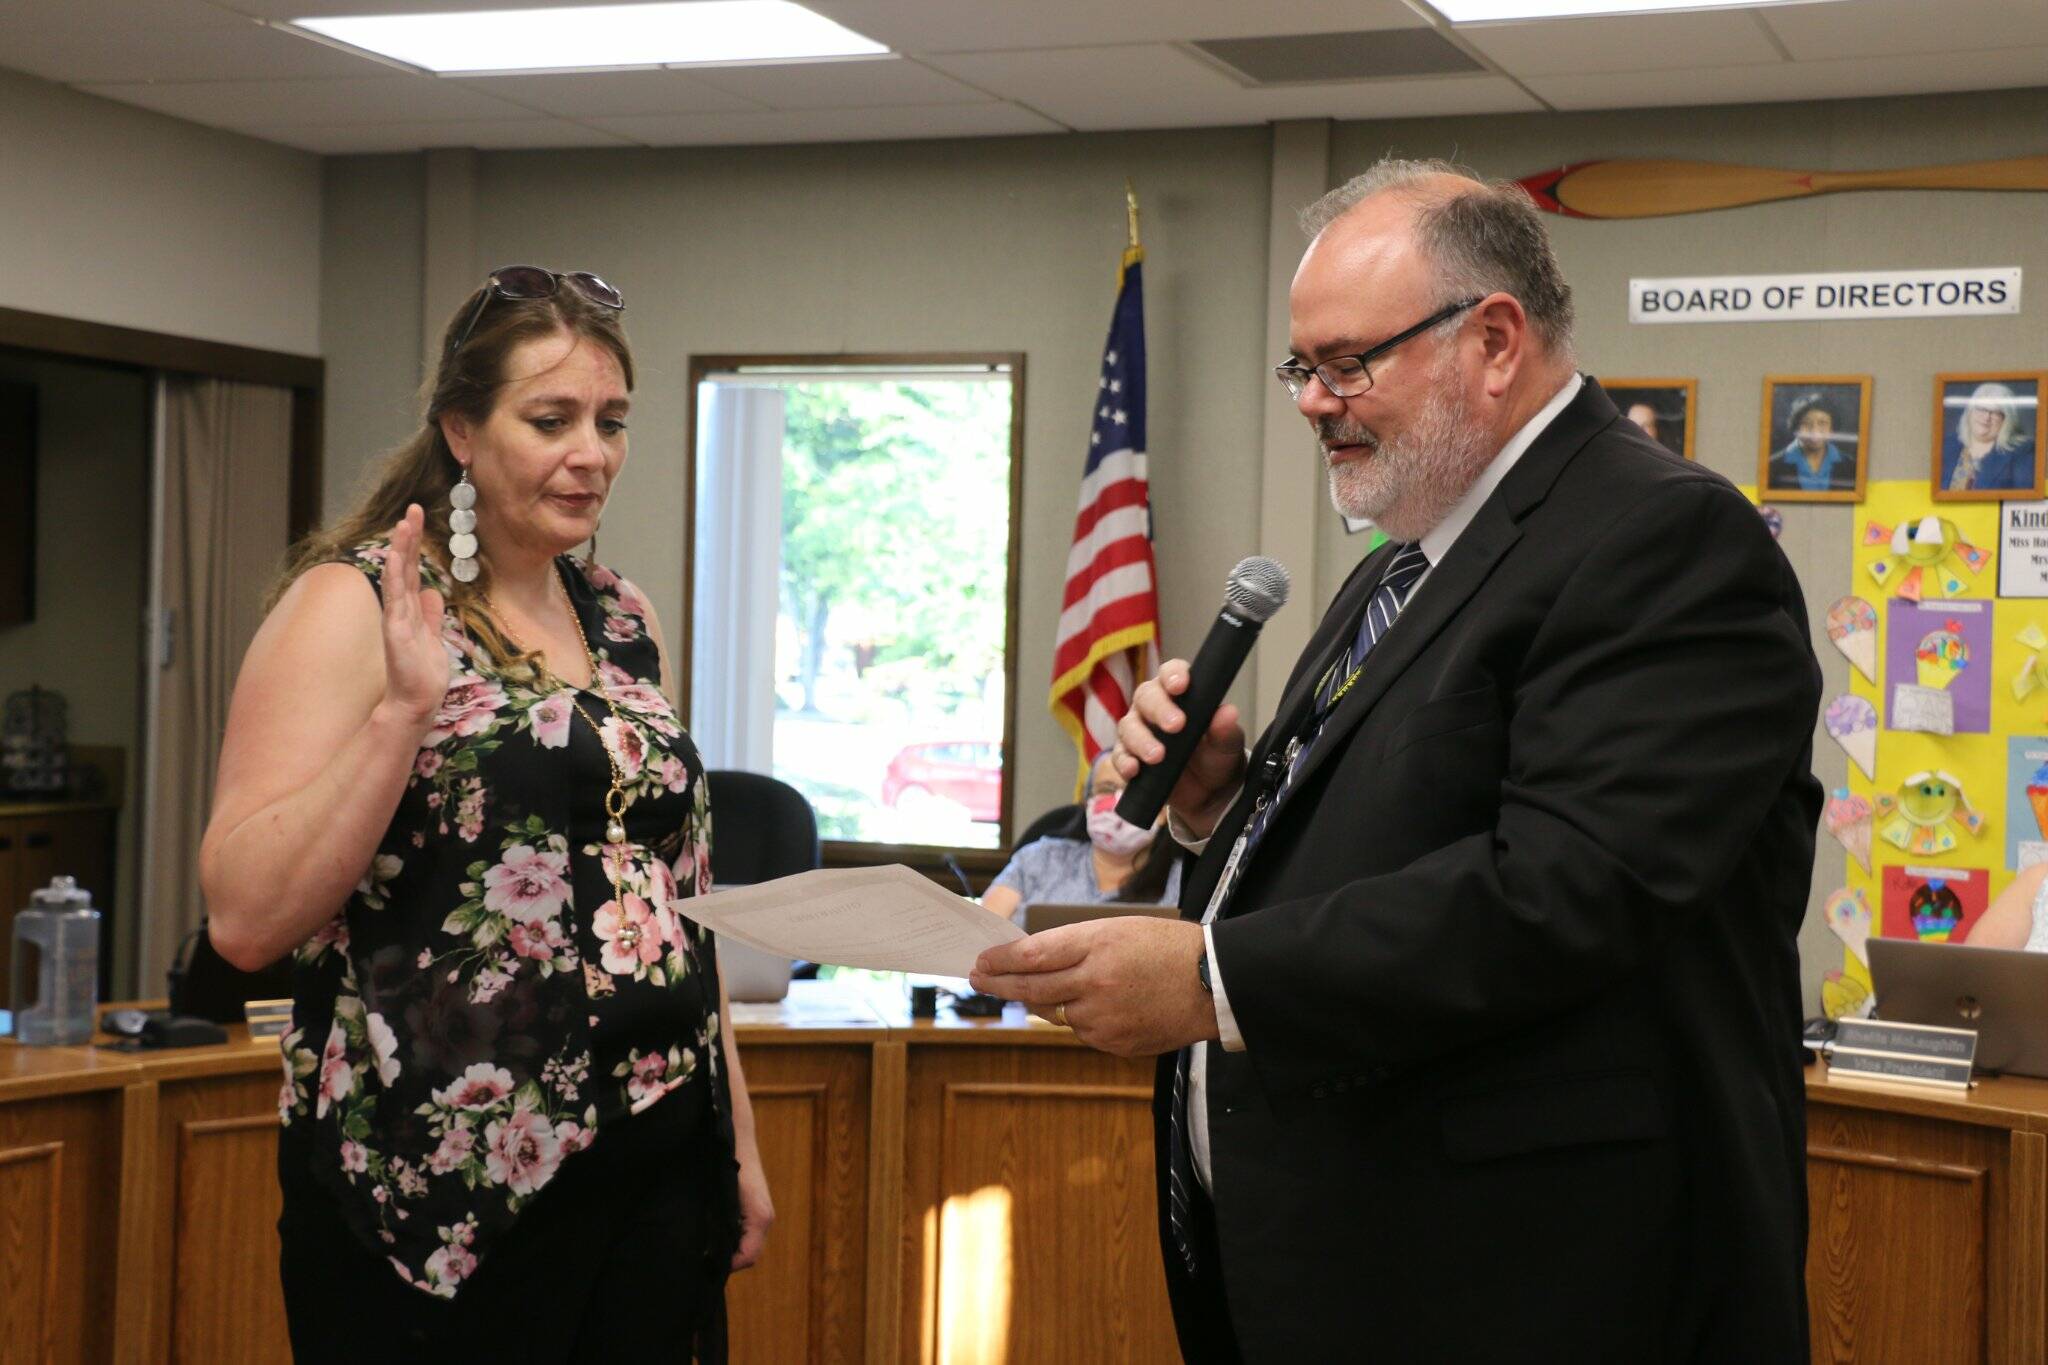 Photo courtesy of Auburn School District
Valerie Gonzales is sworn in by Auburn School District Superintendent Alan Spicciati on June 27.